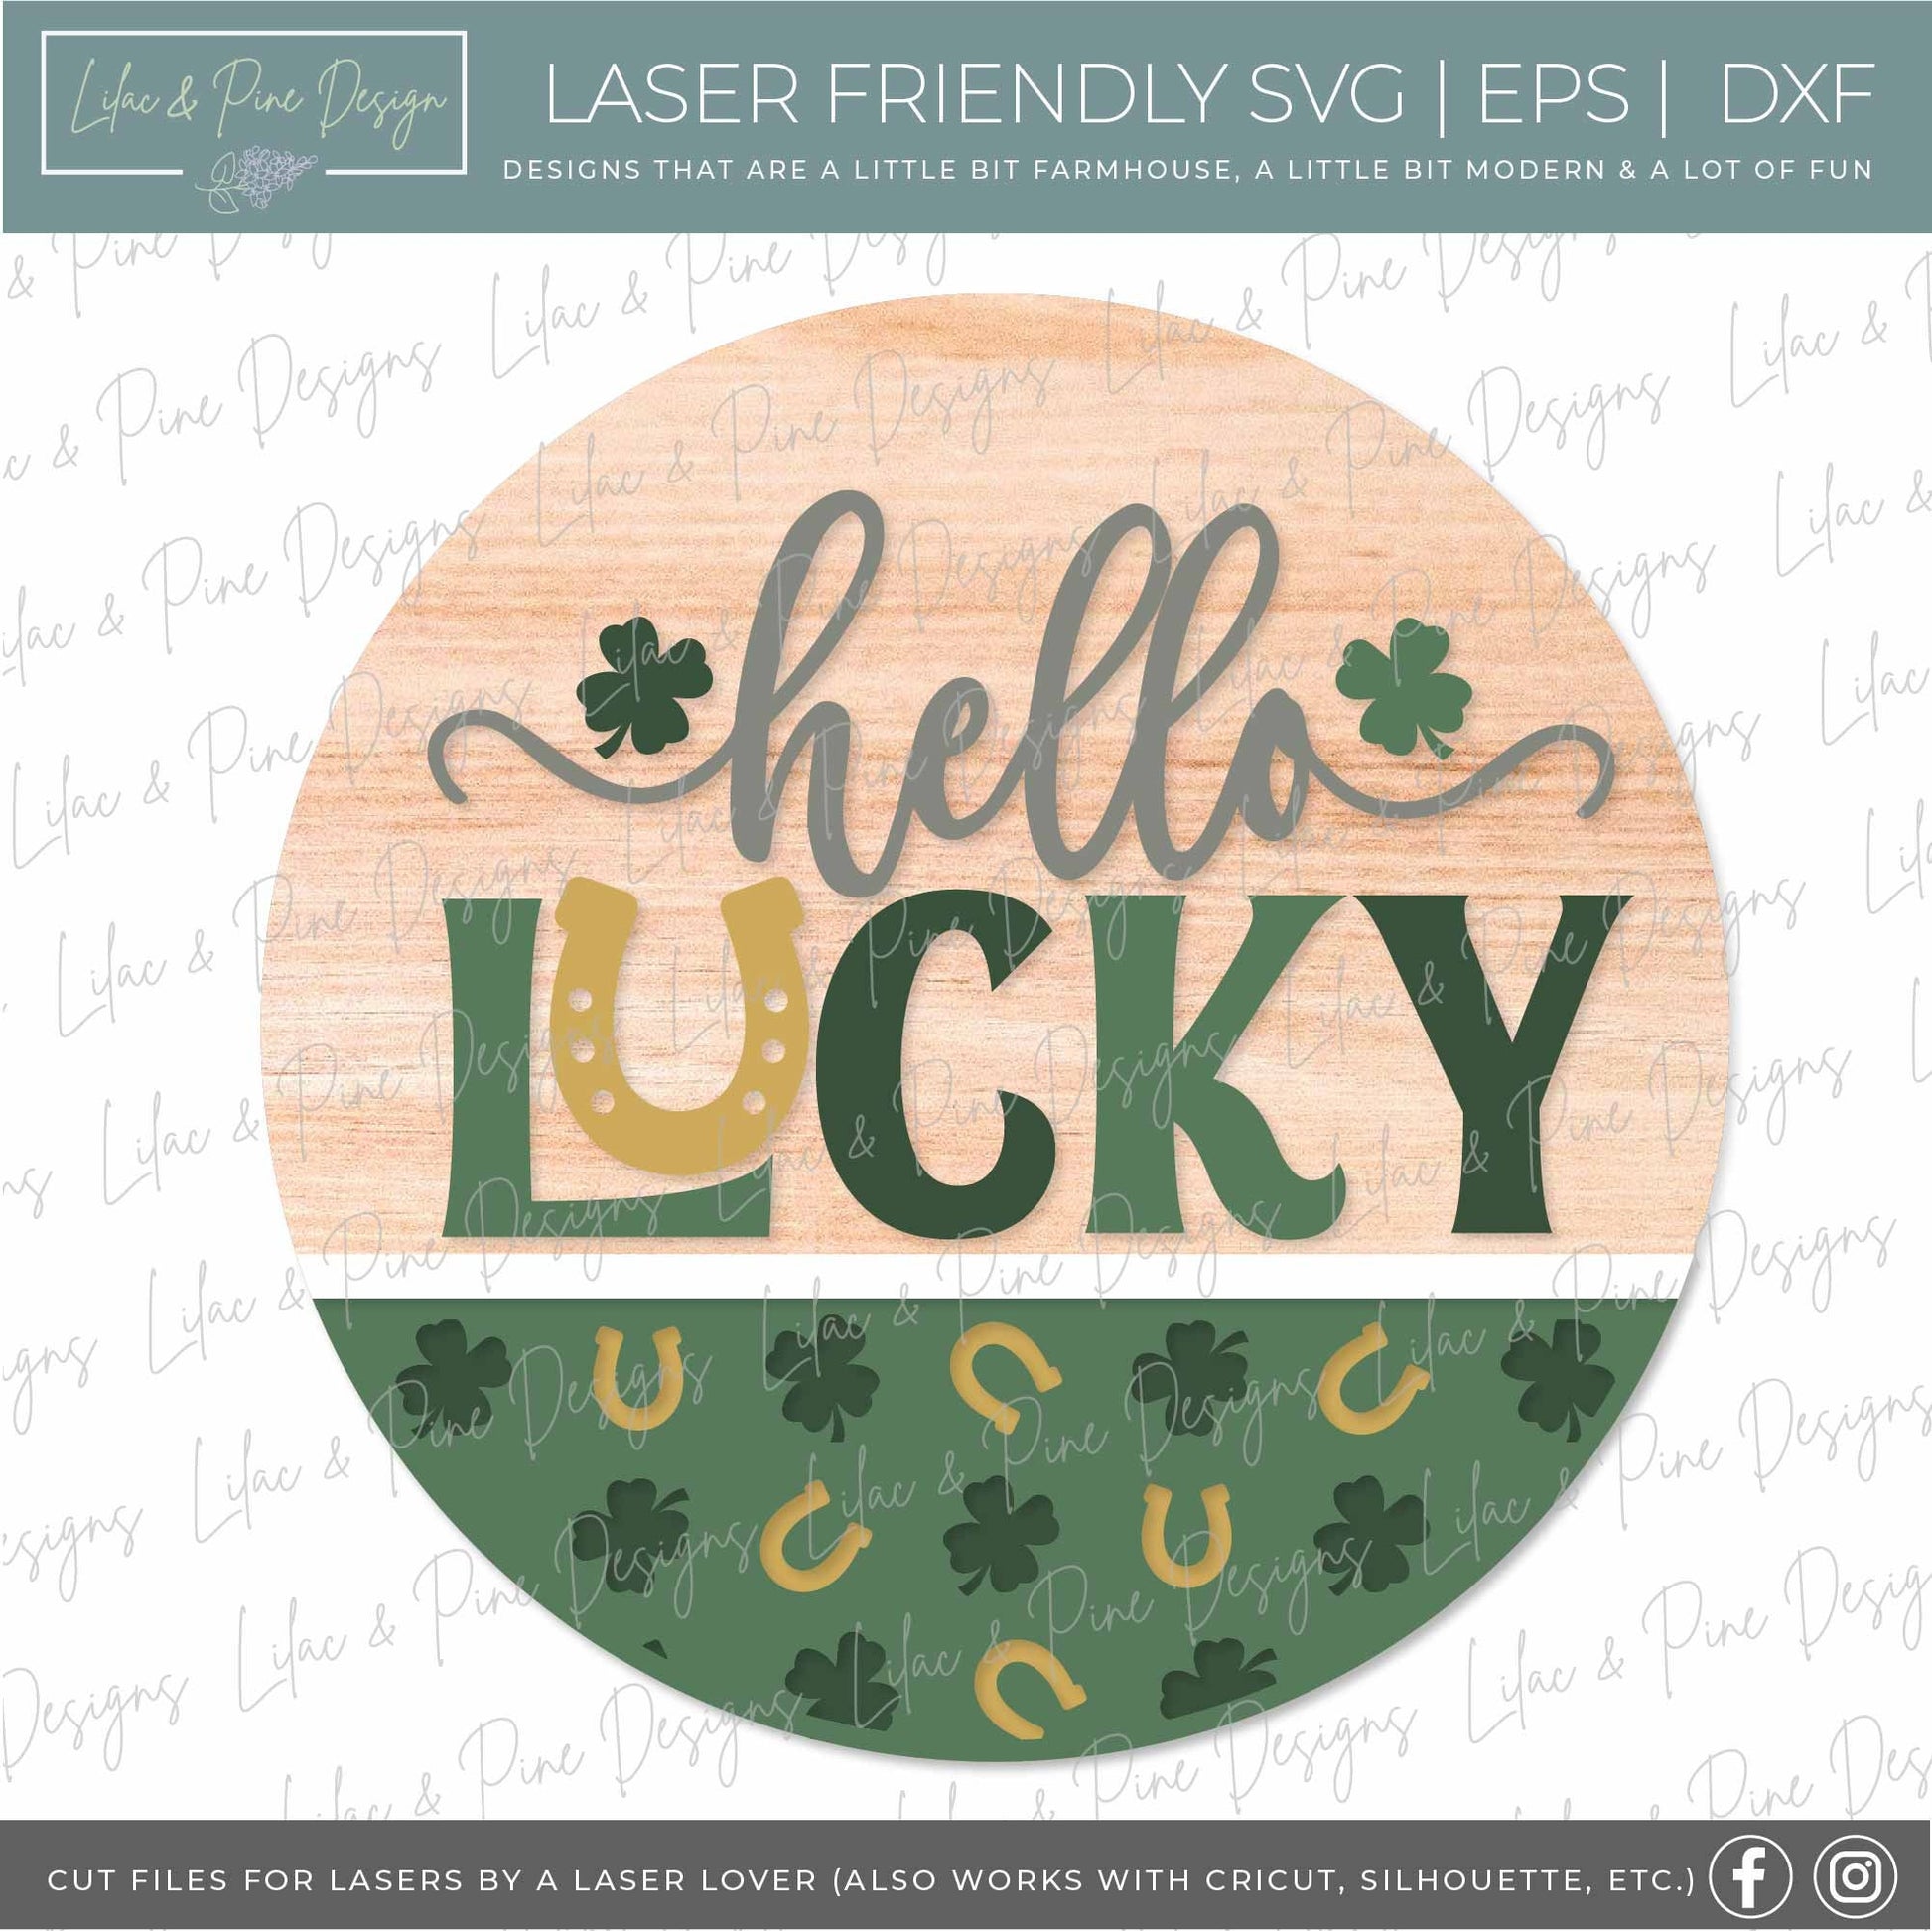 Lucky sign SVG, St Patricks Day door hanger, Shamrock Welcome sign SVG, lucky clover door round svg, Glowforge SVG, laser cut file